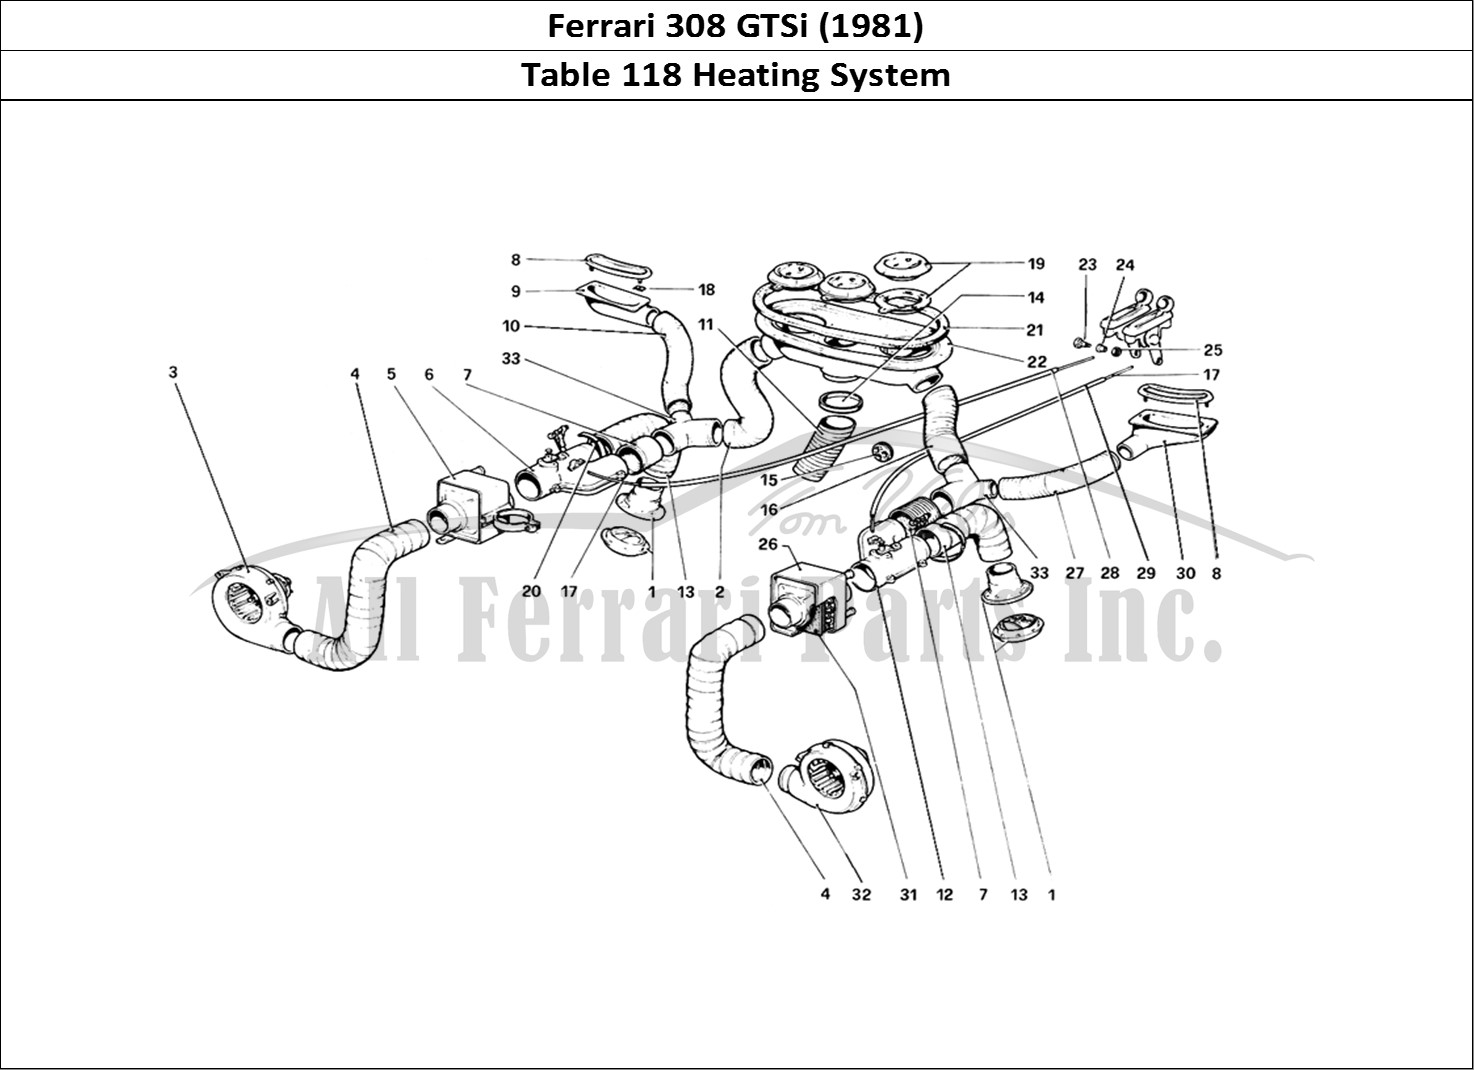 Ferrari Parts Ferrari 308 GTBi (1981) Page 118 Heating System